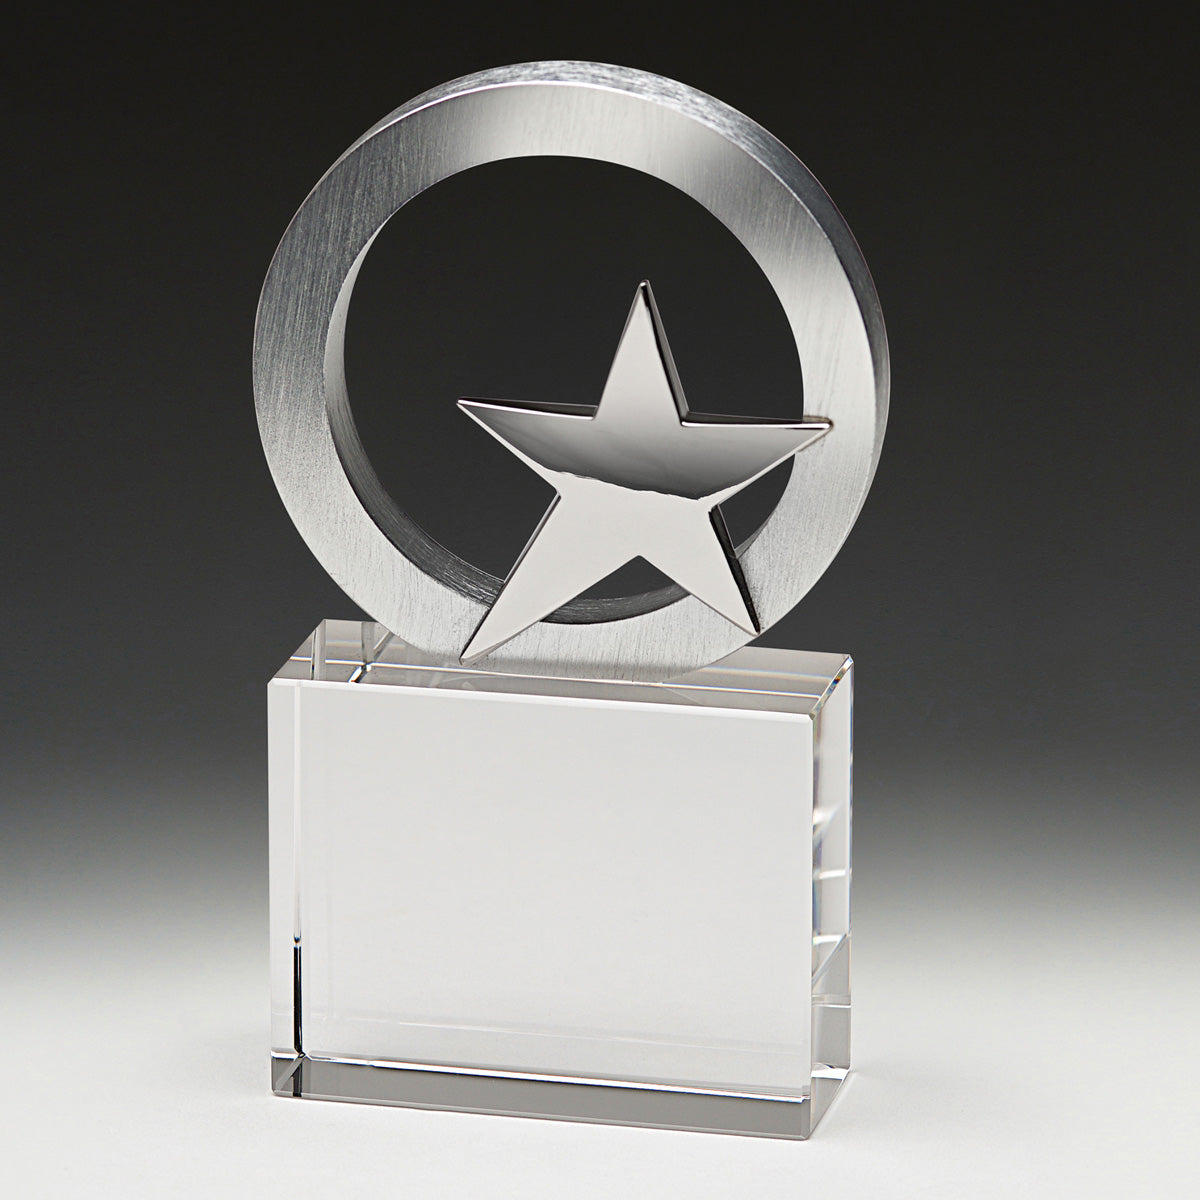 Circulus Star Crystal Award